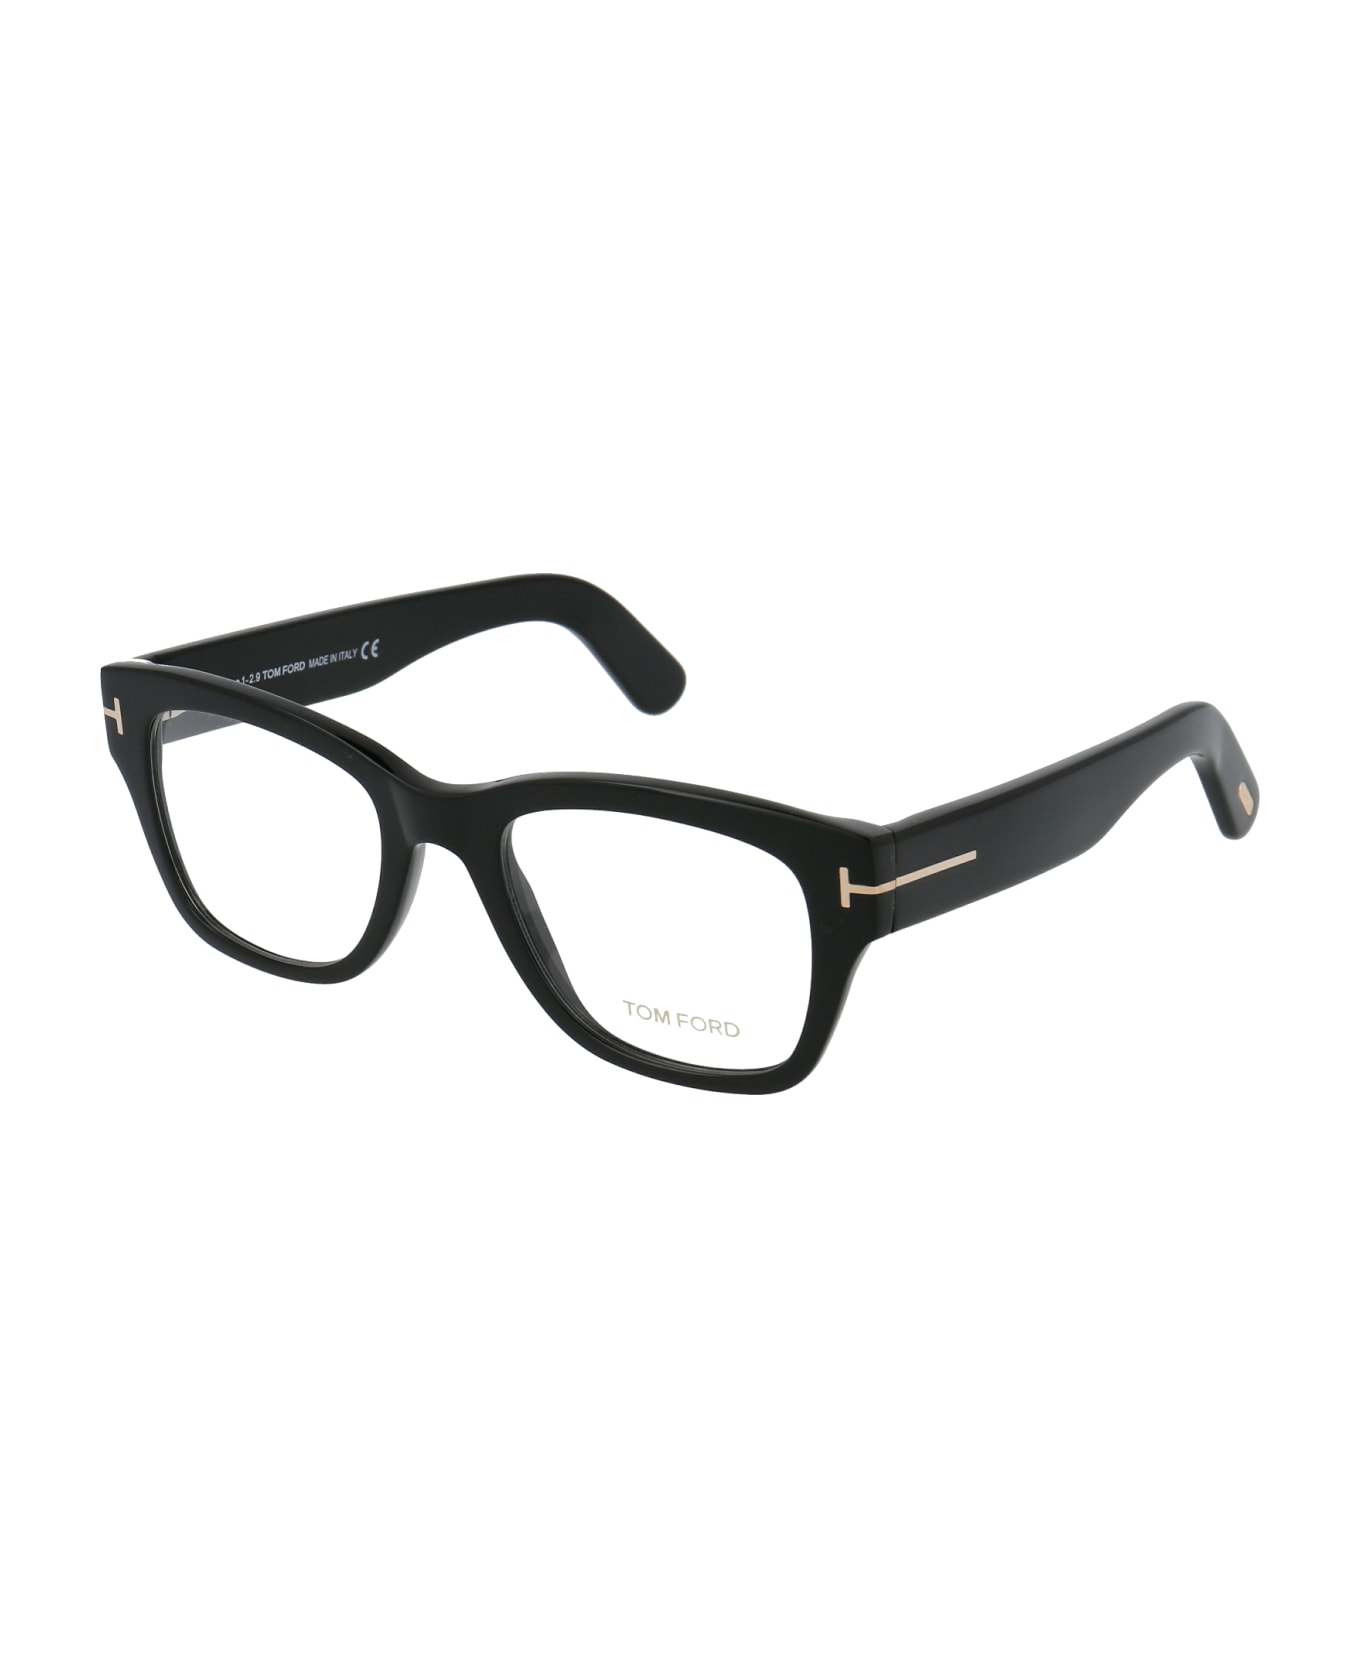 Tom Ford Eyewear Ft5379 Glasses - 001 Nero Lucido